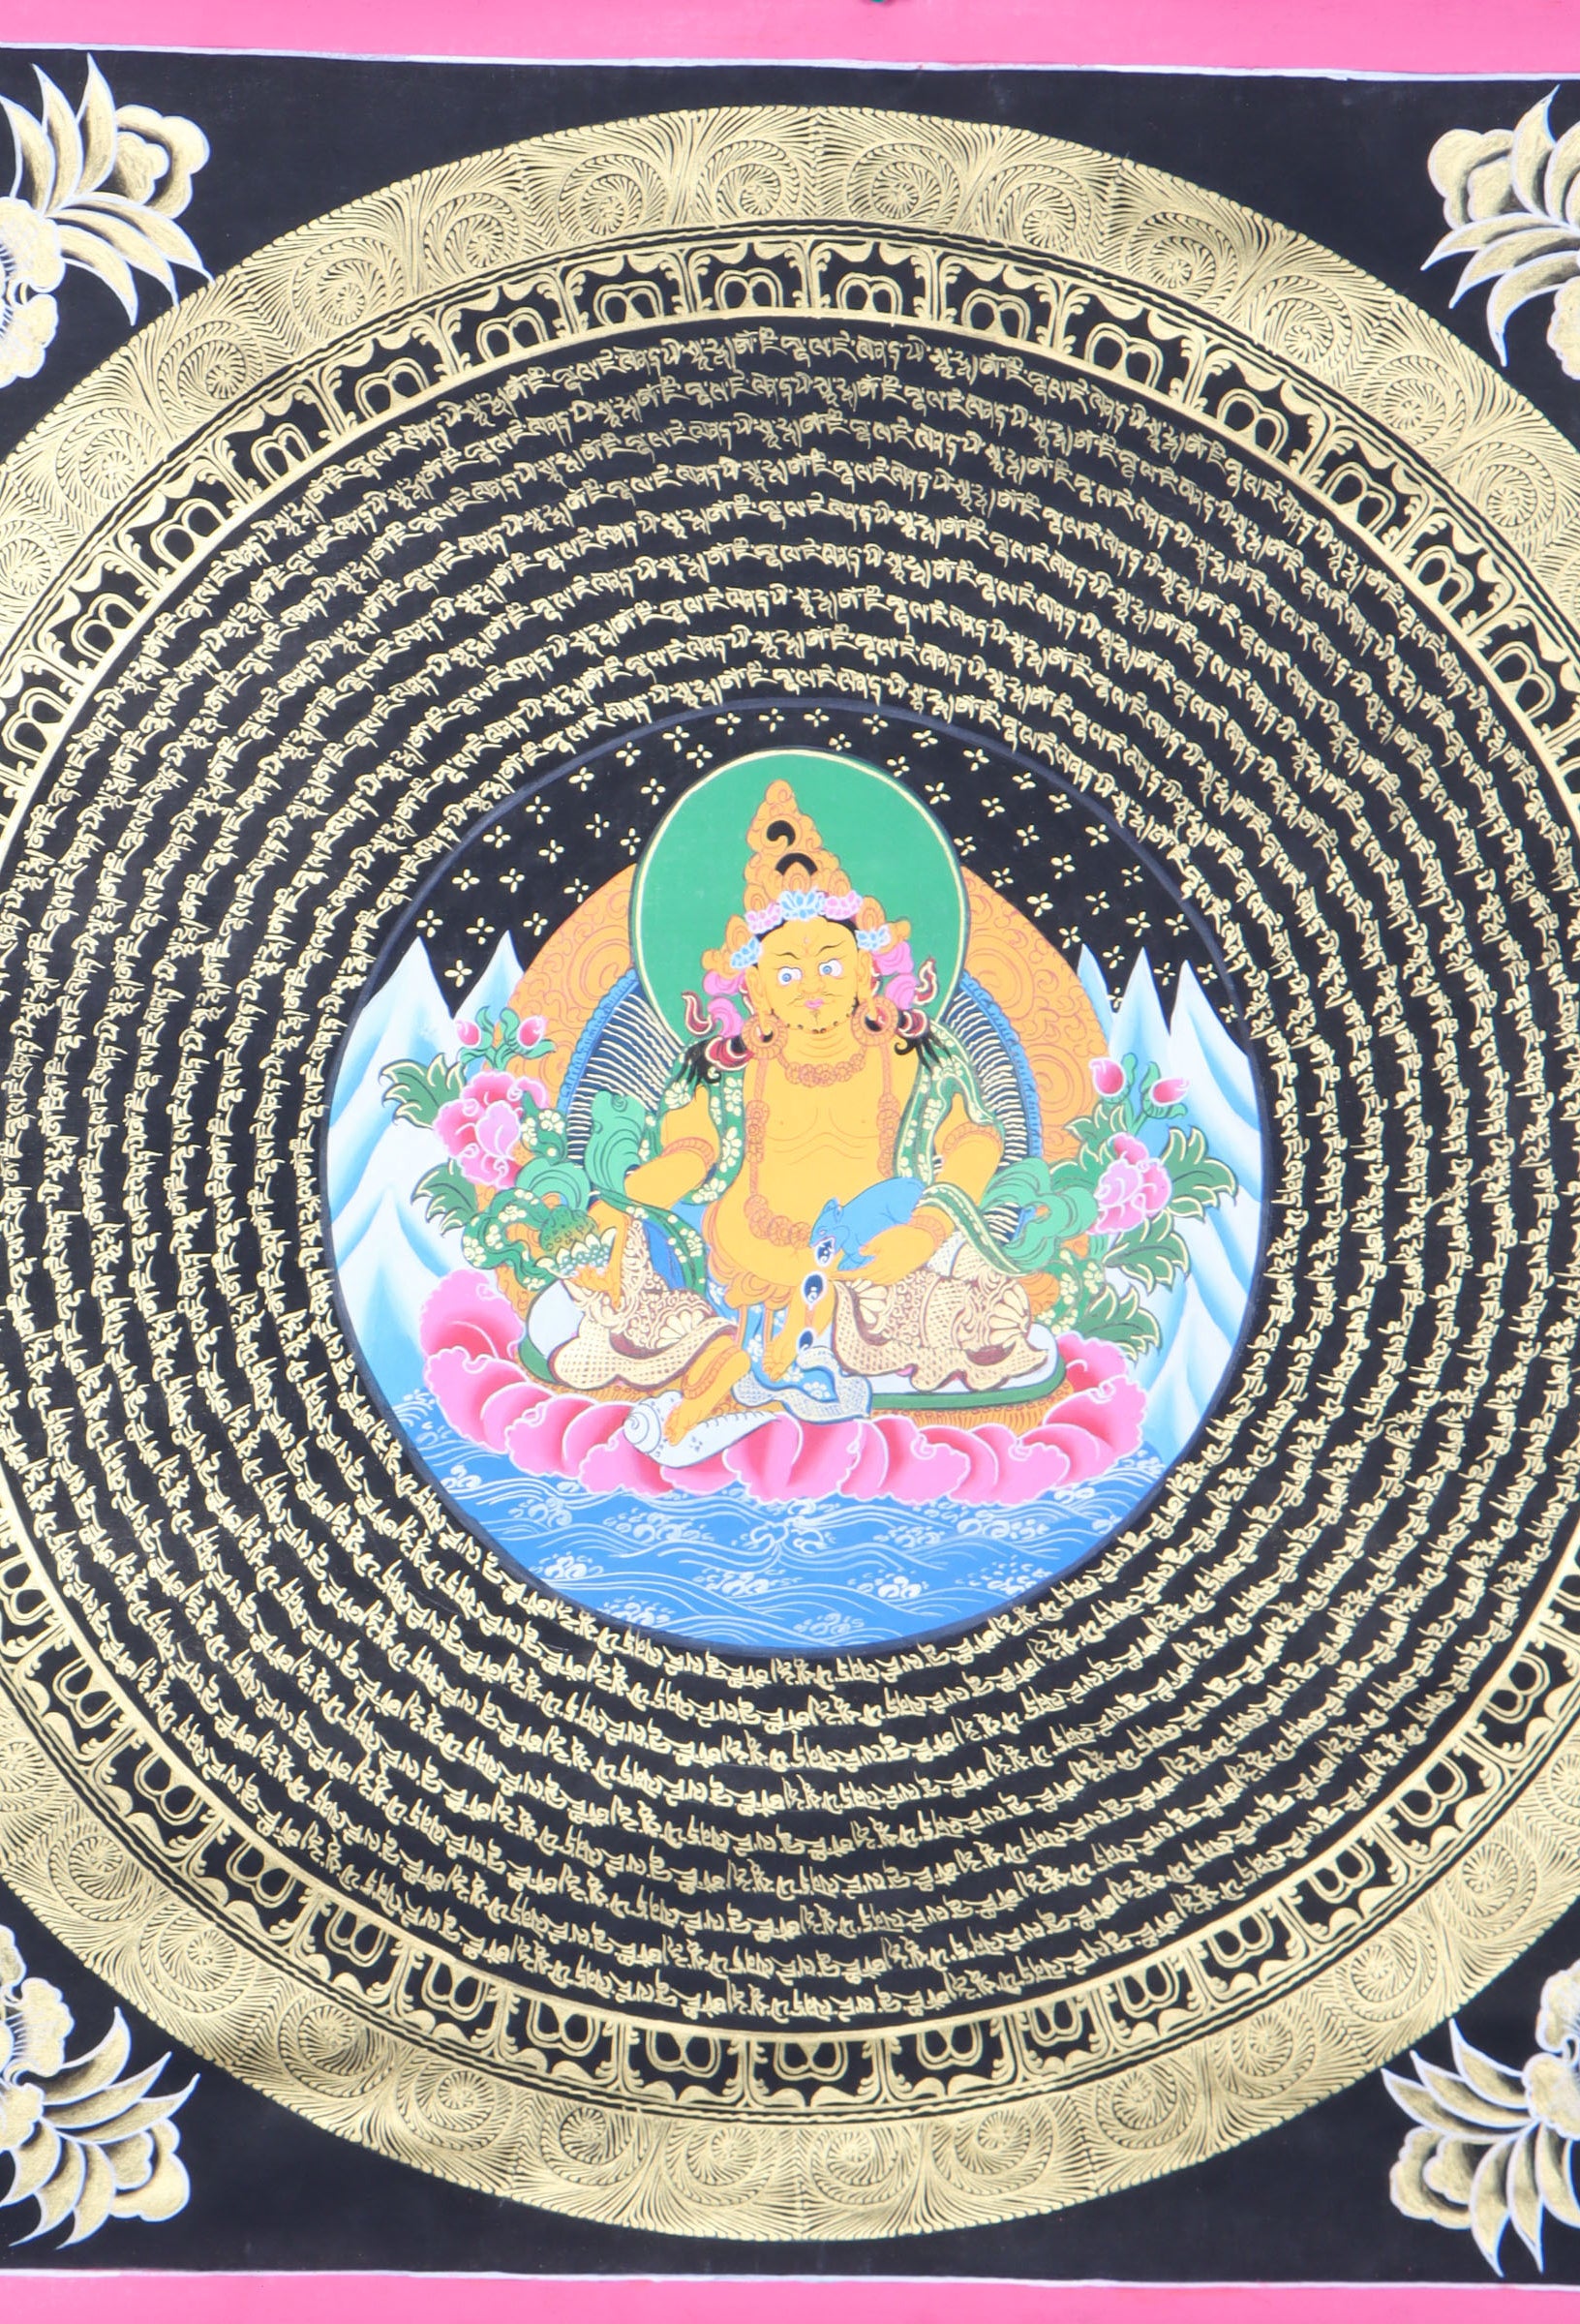 Kuber Mandala Thangka for meditation and wall  decor .